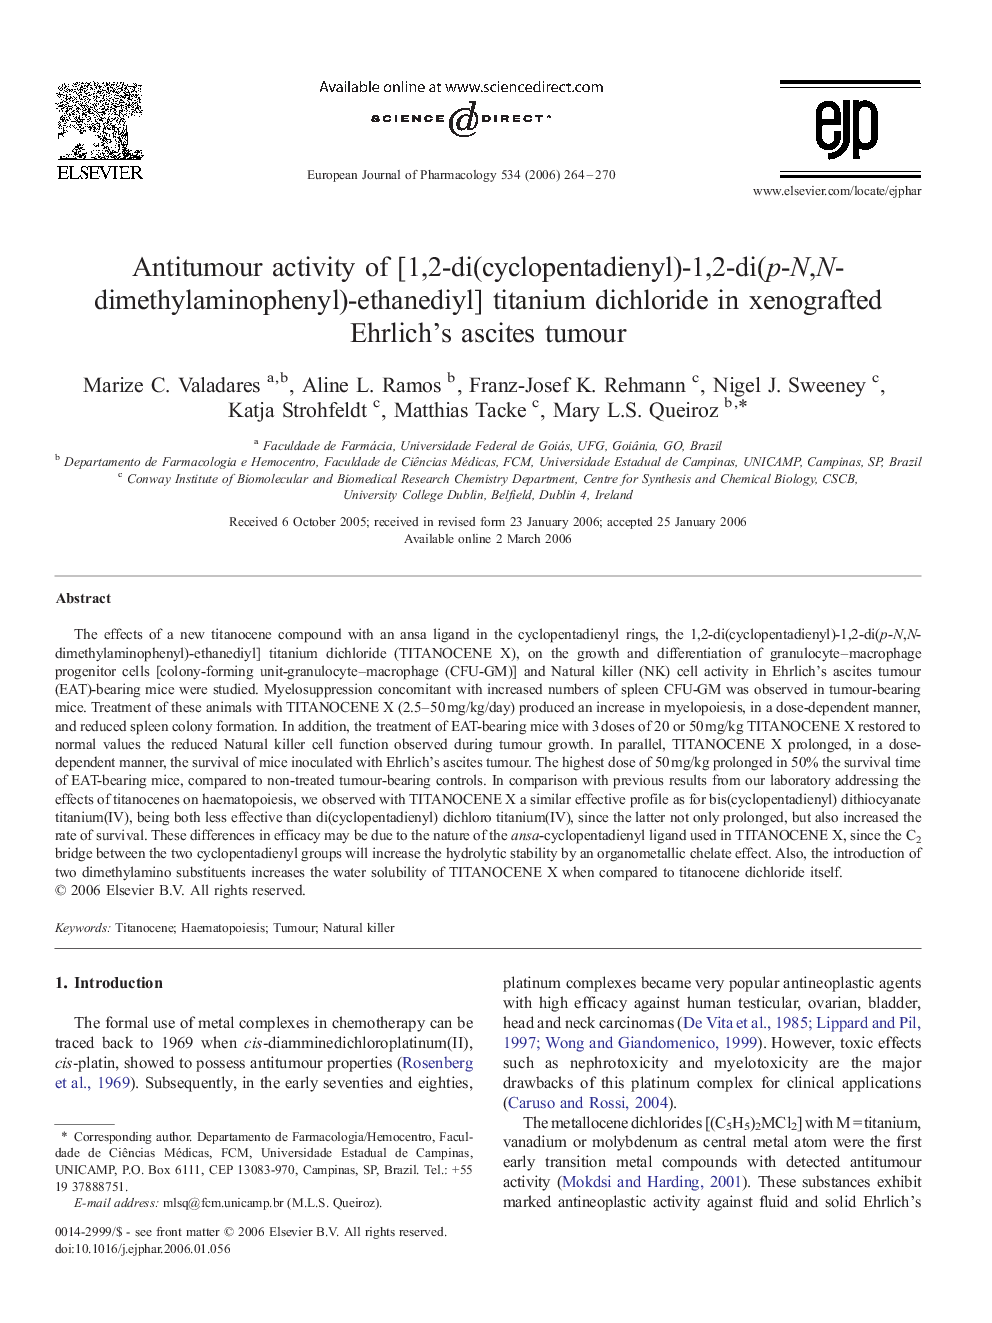 Antitumour activity of [1,2-di(cyclopentadienyl)-1,2-di(p-N,N-dimethylaminophenyl)-ethanediyl] titanium dichloride in xenografted Ehrlich's ascites tumour